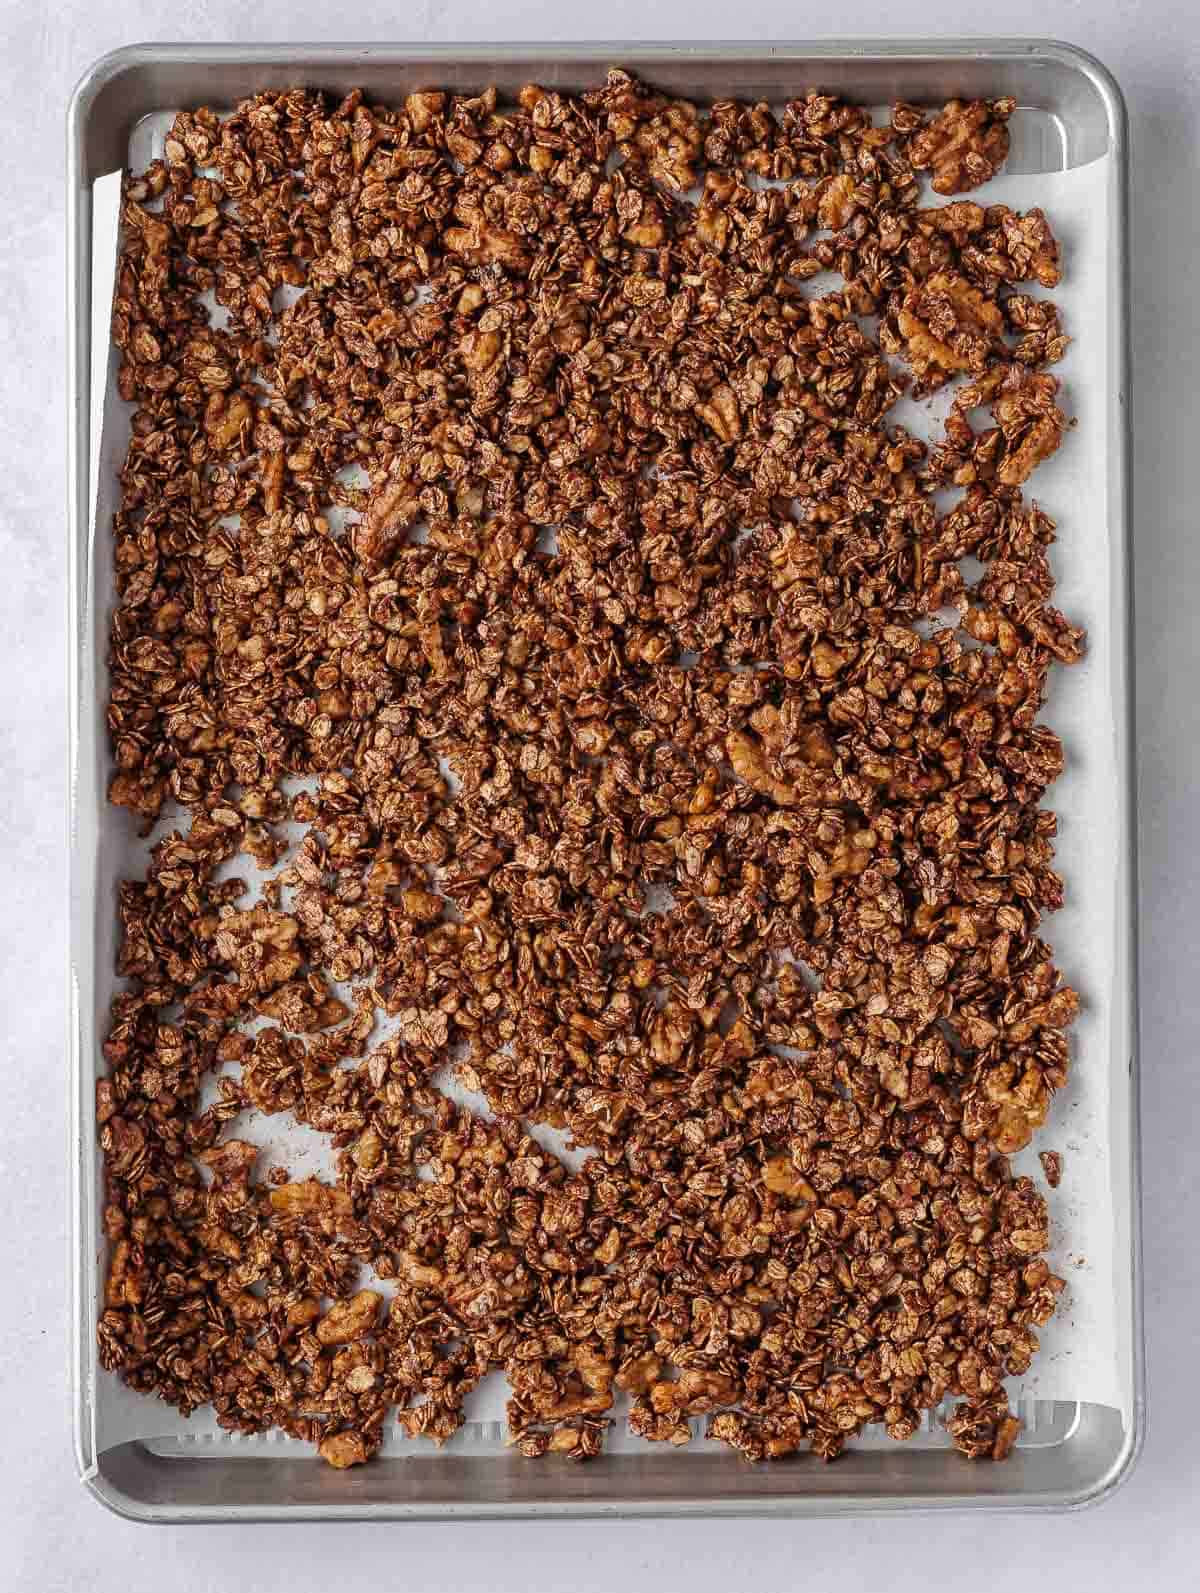 Oat and Walnut granola on a tray.